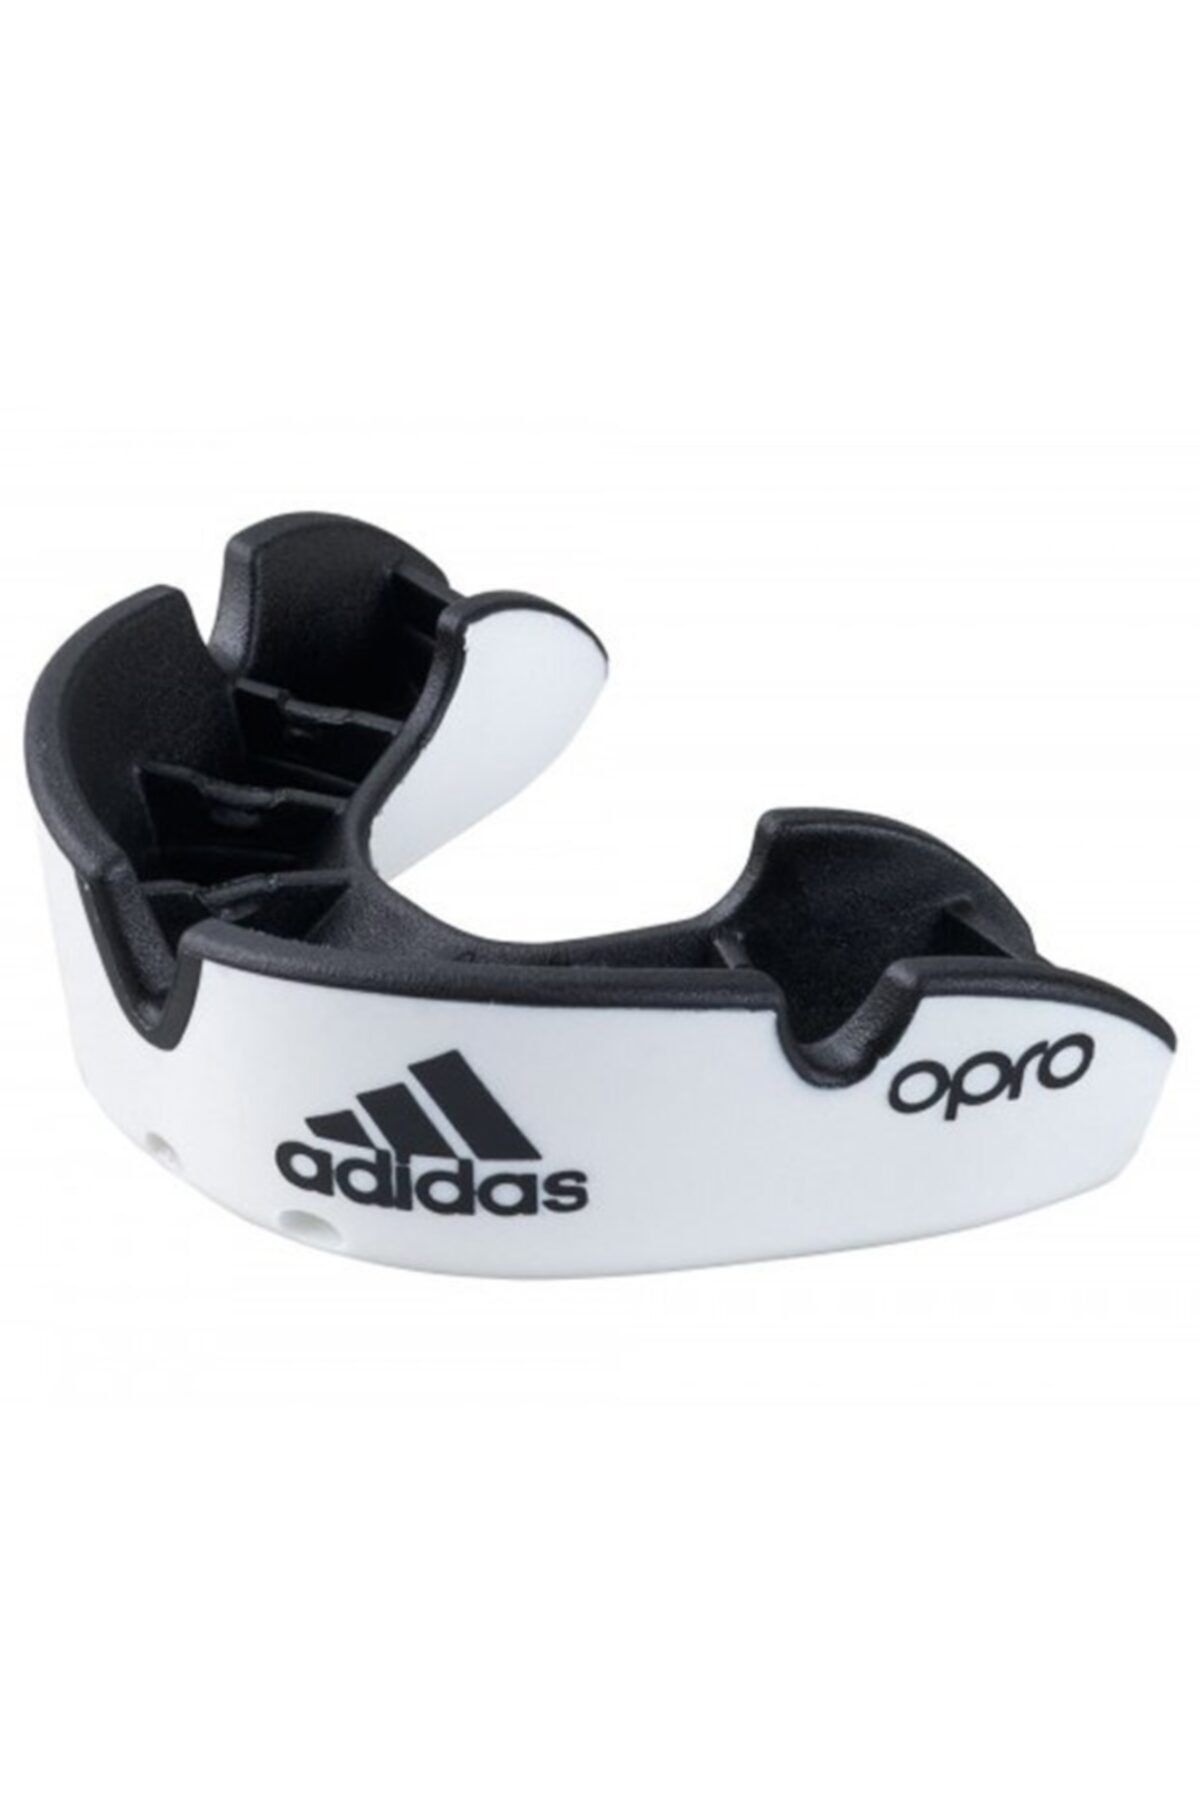 adidas Beyaz Adıbp32 Silver Dişlik Profesyonel Sporcu Dişliği Opro Mouthguard